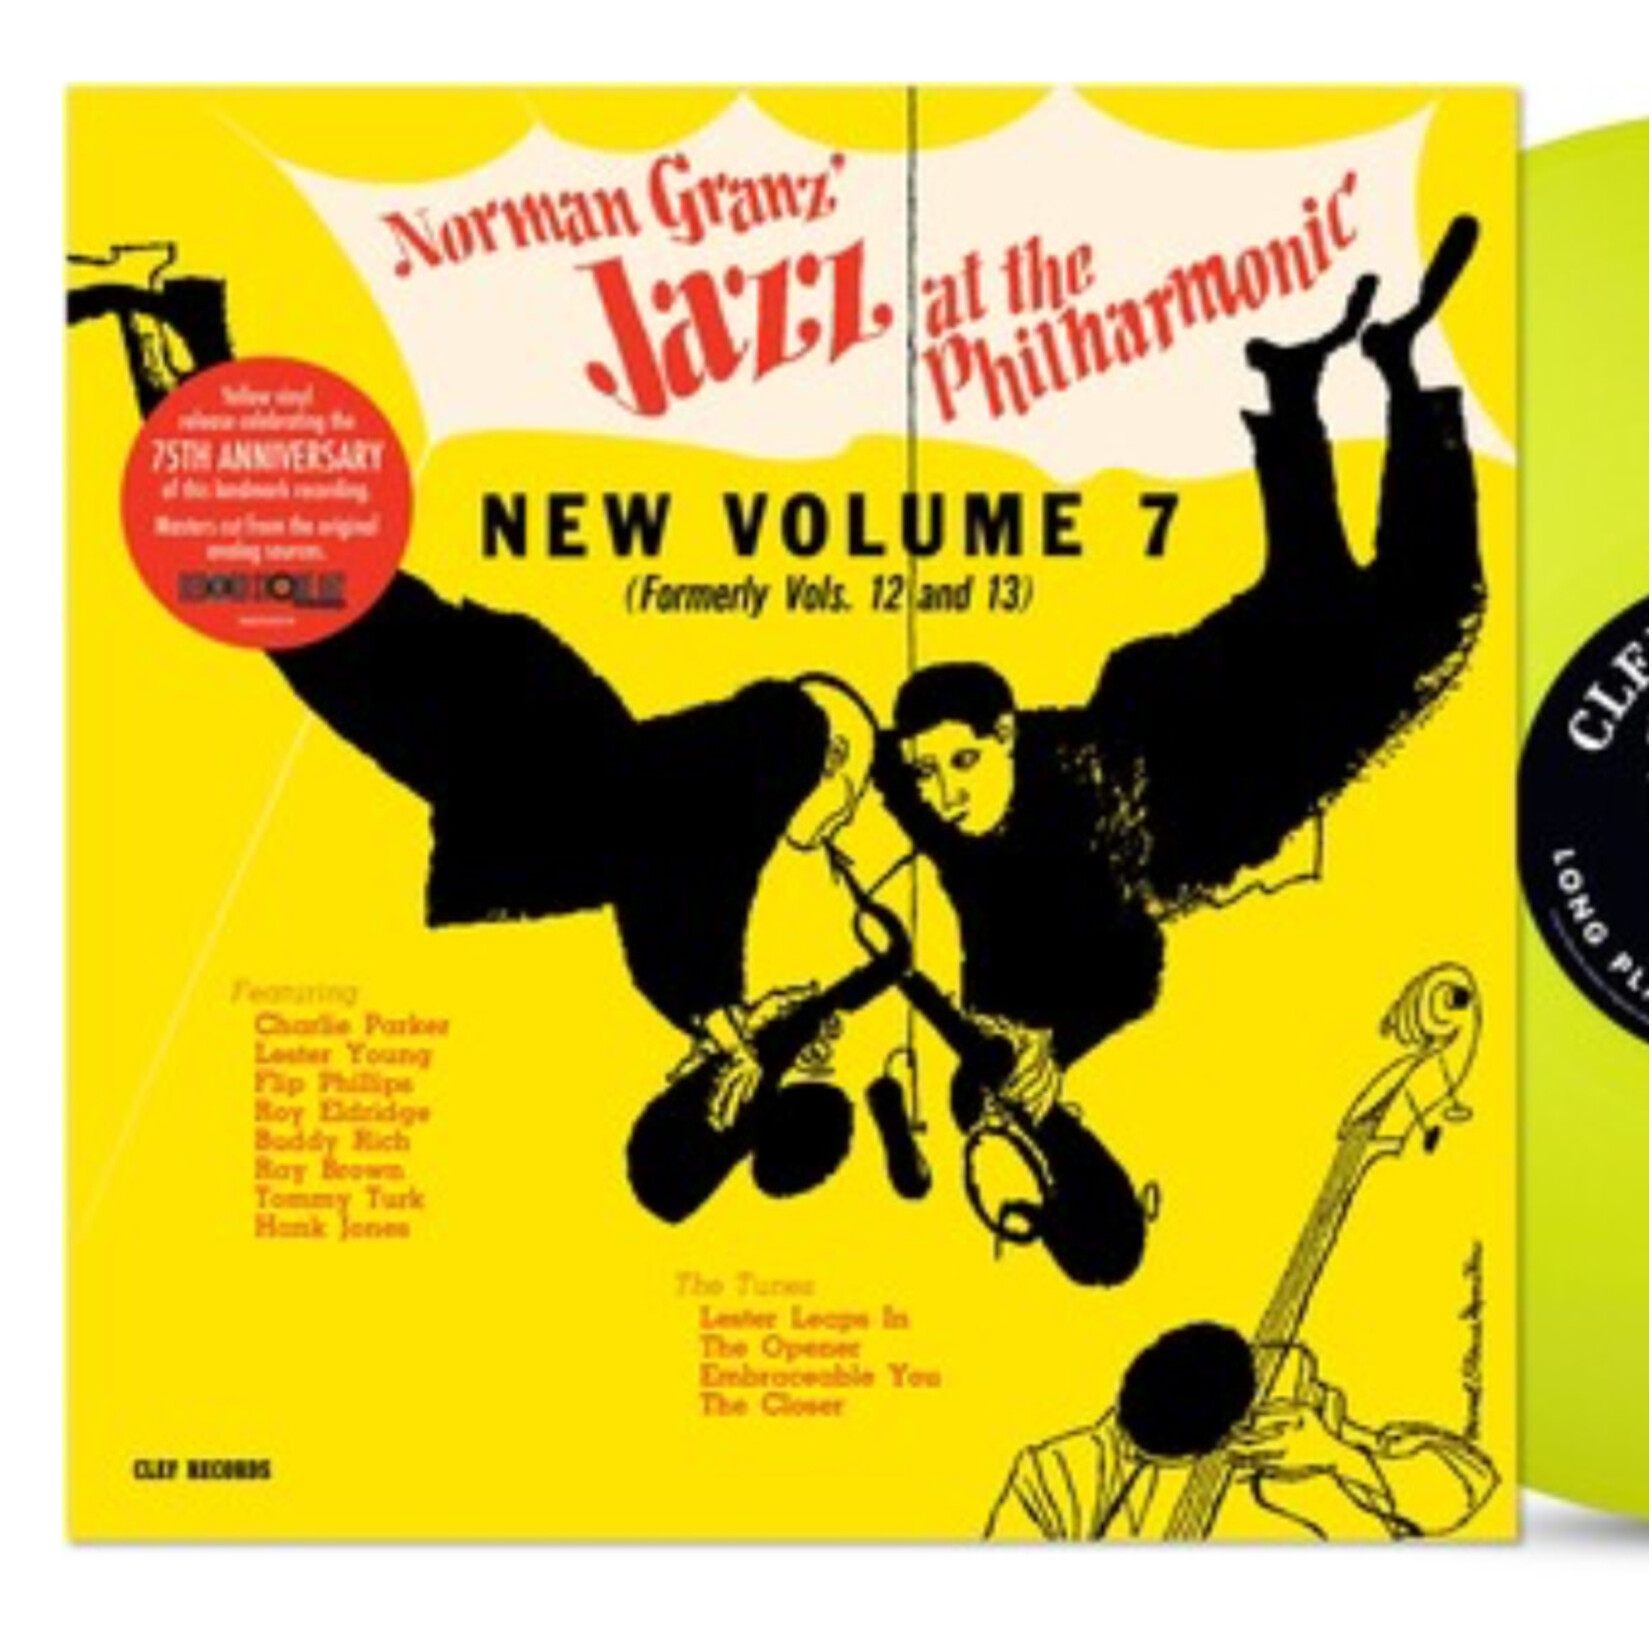 Charlie Parker - Norman Granz' Jazz At The Philharmonic New Volume 7 - RSD2024 - Vinyl LP (NEW)